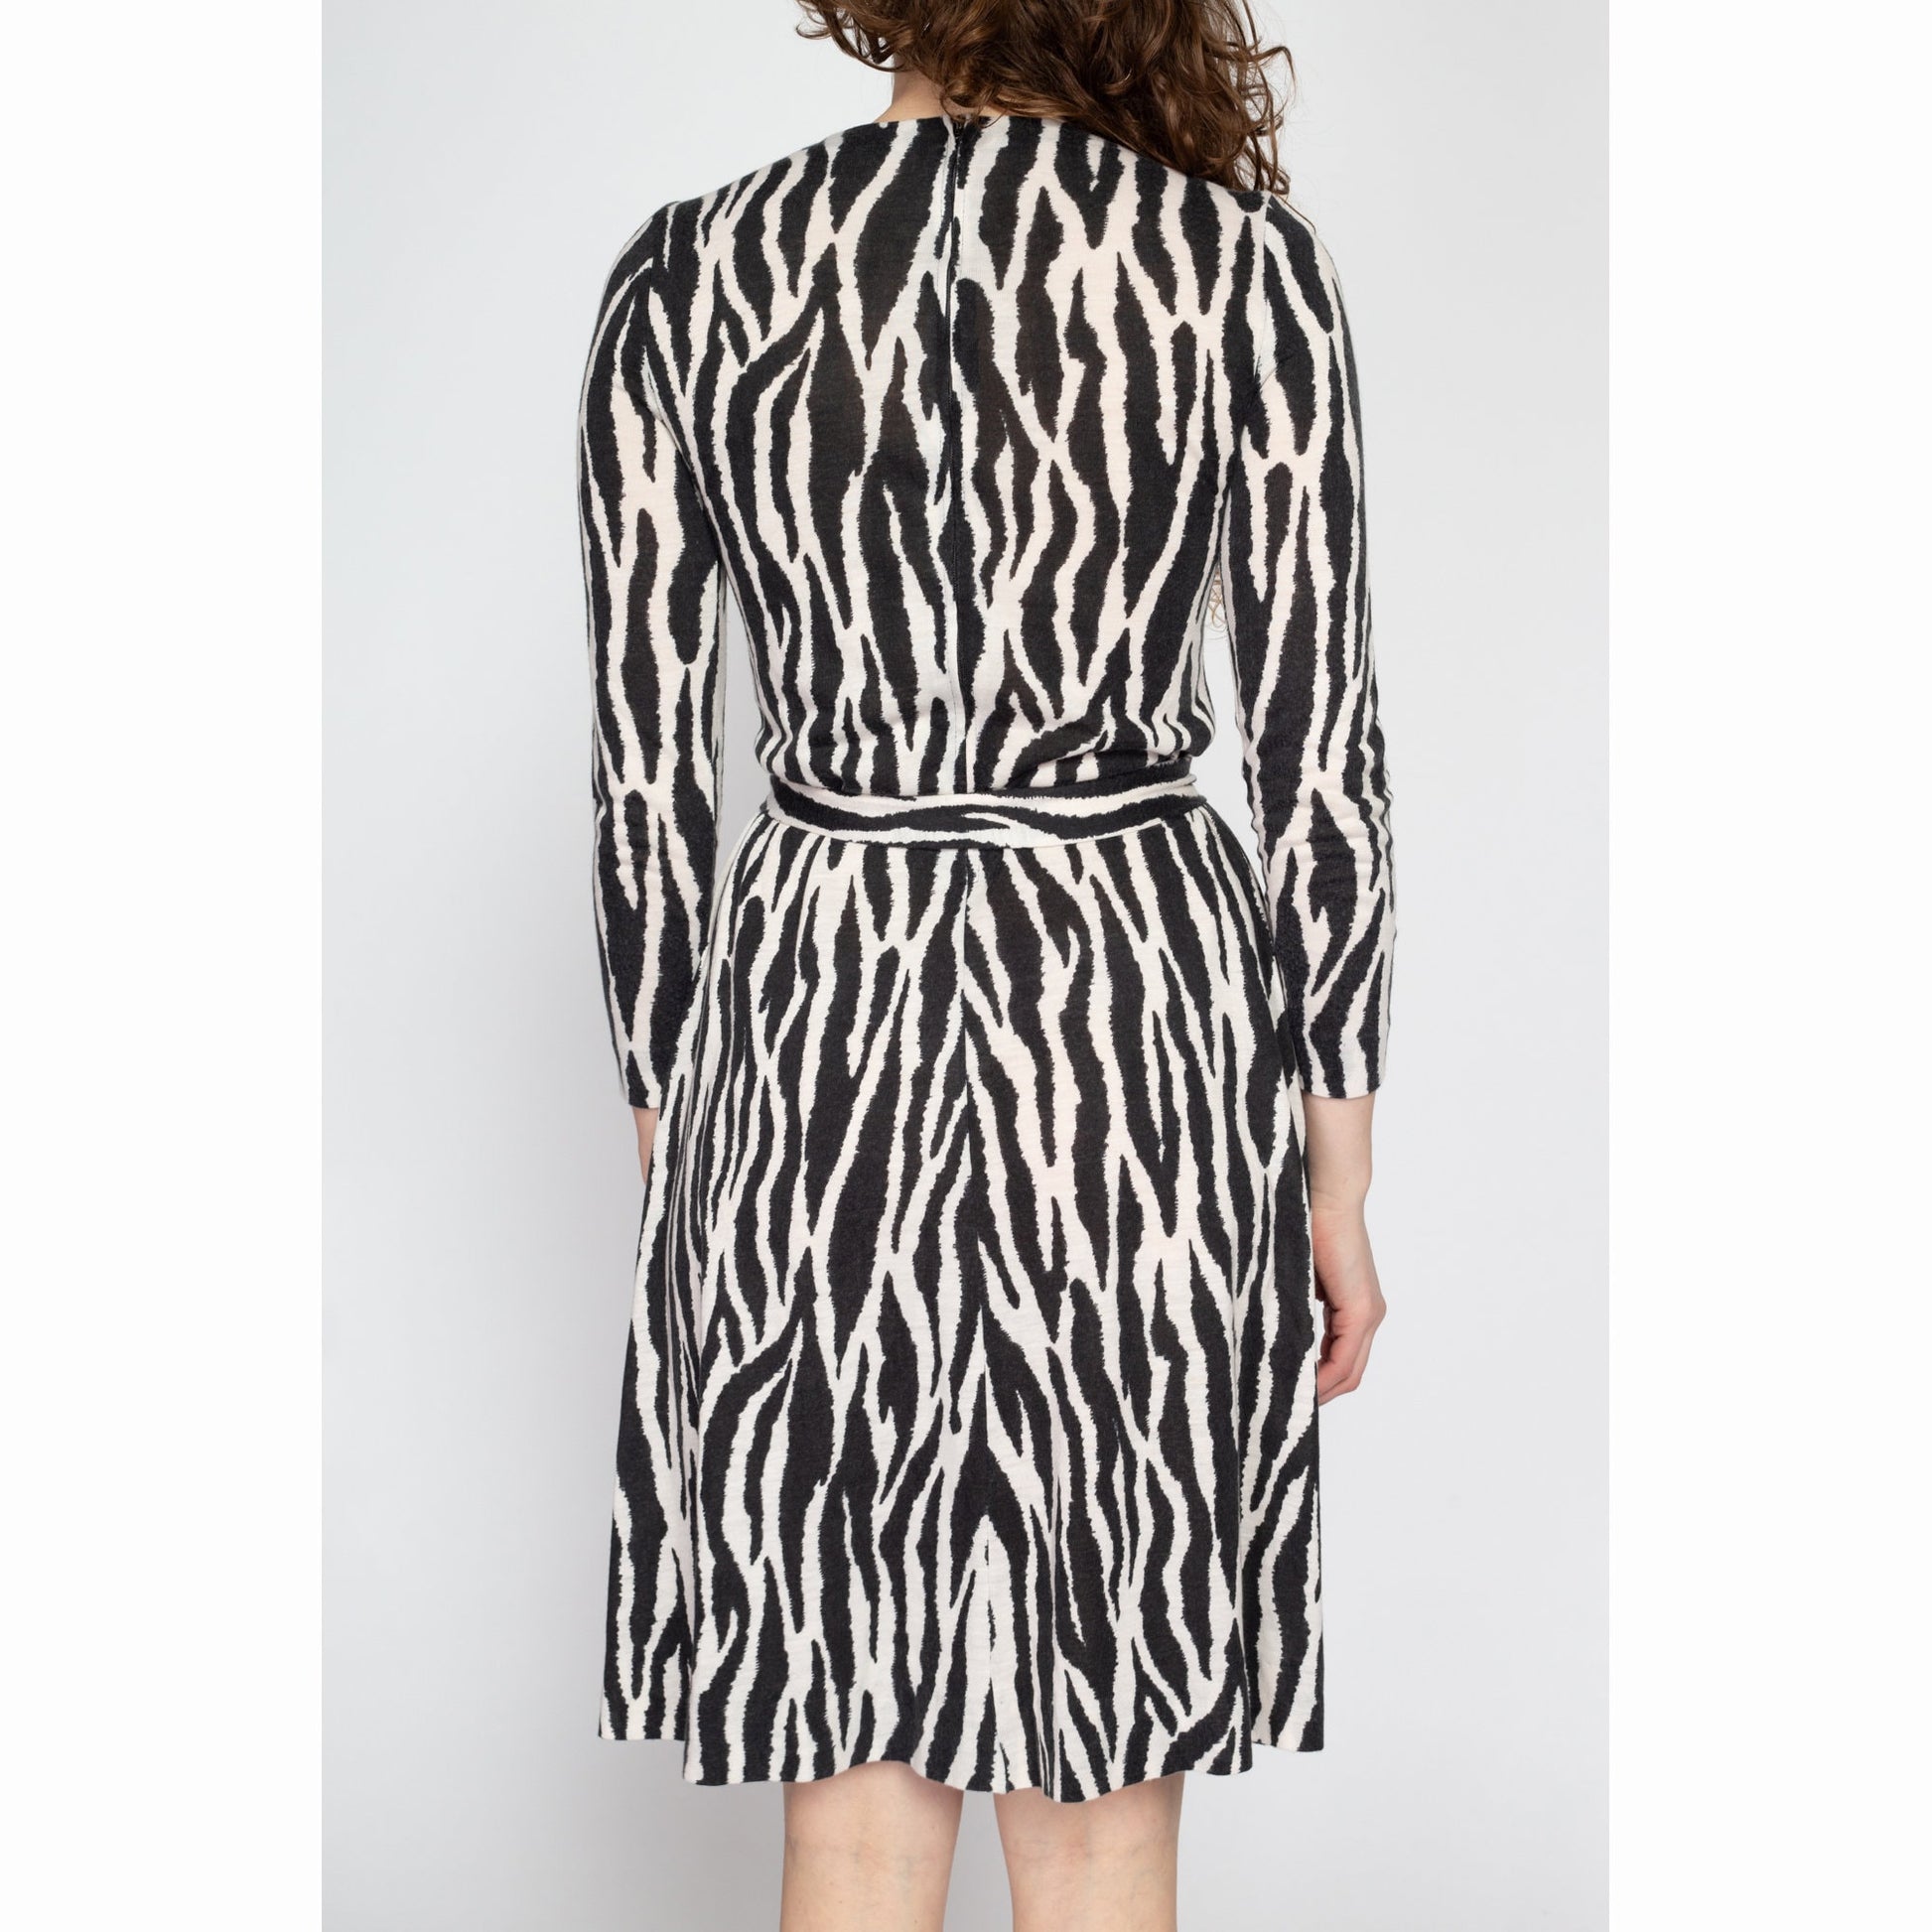 Small 80s Zebra Print Belted Dress | Vintage Black & White Animal Print Long Sleeve Mini Dress